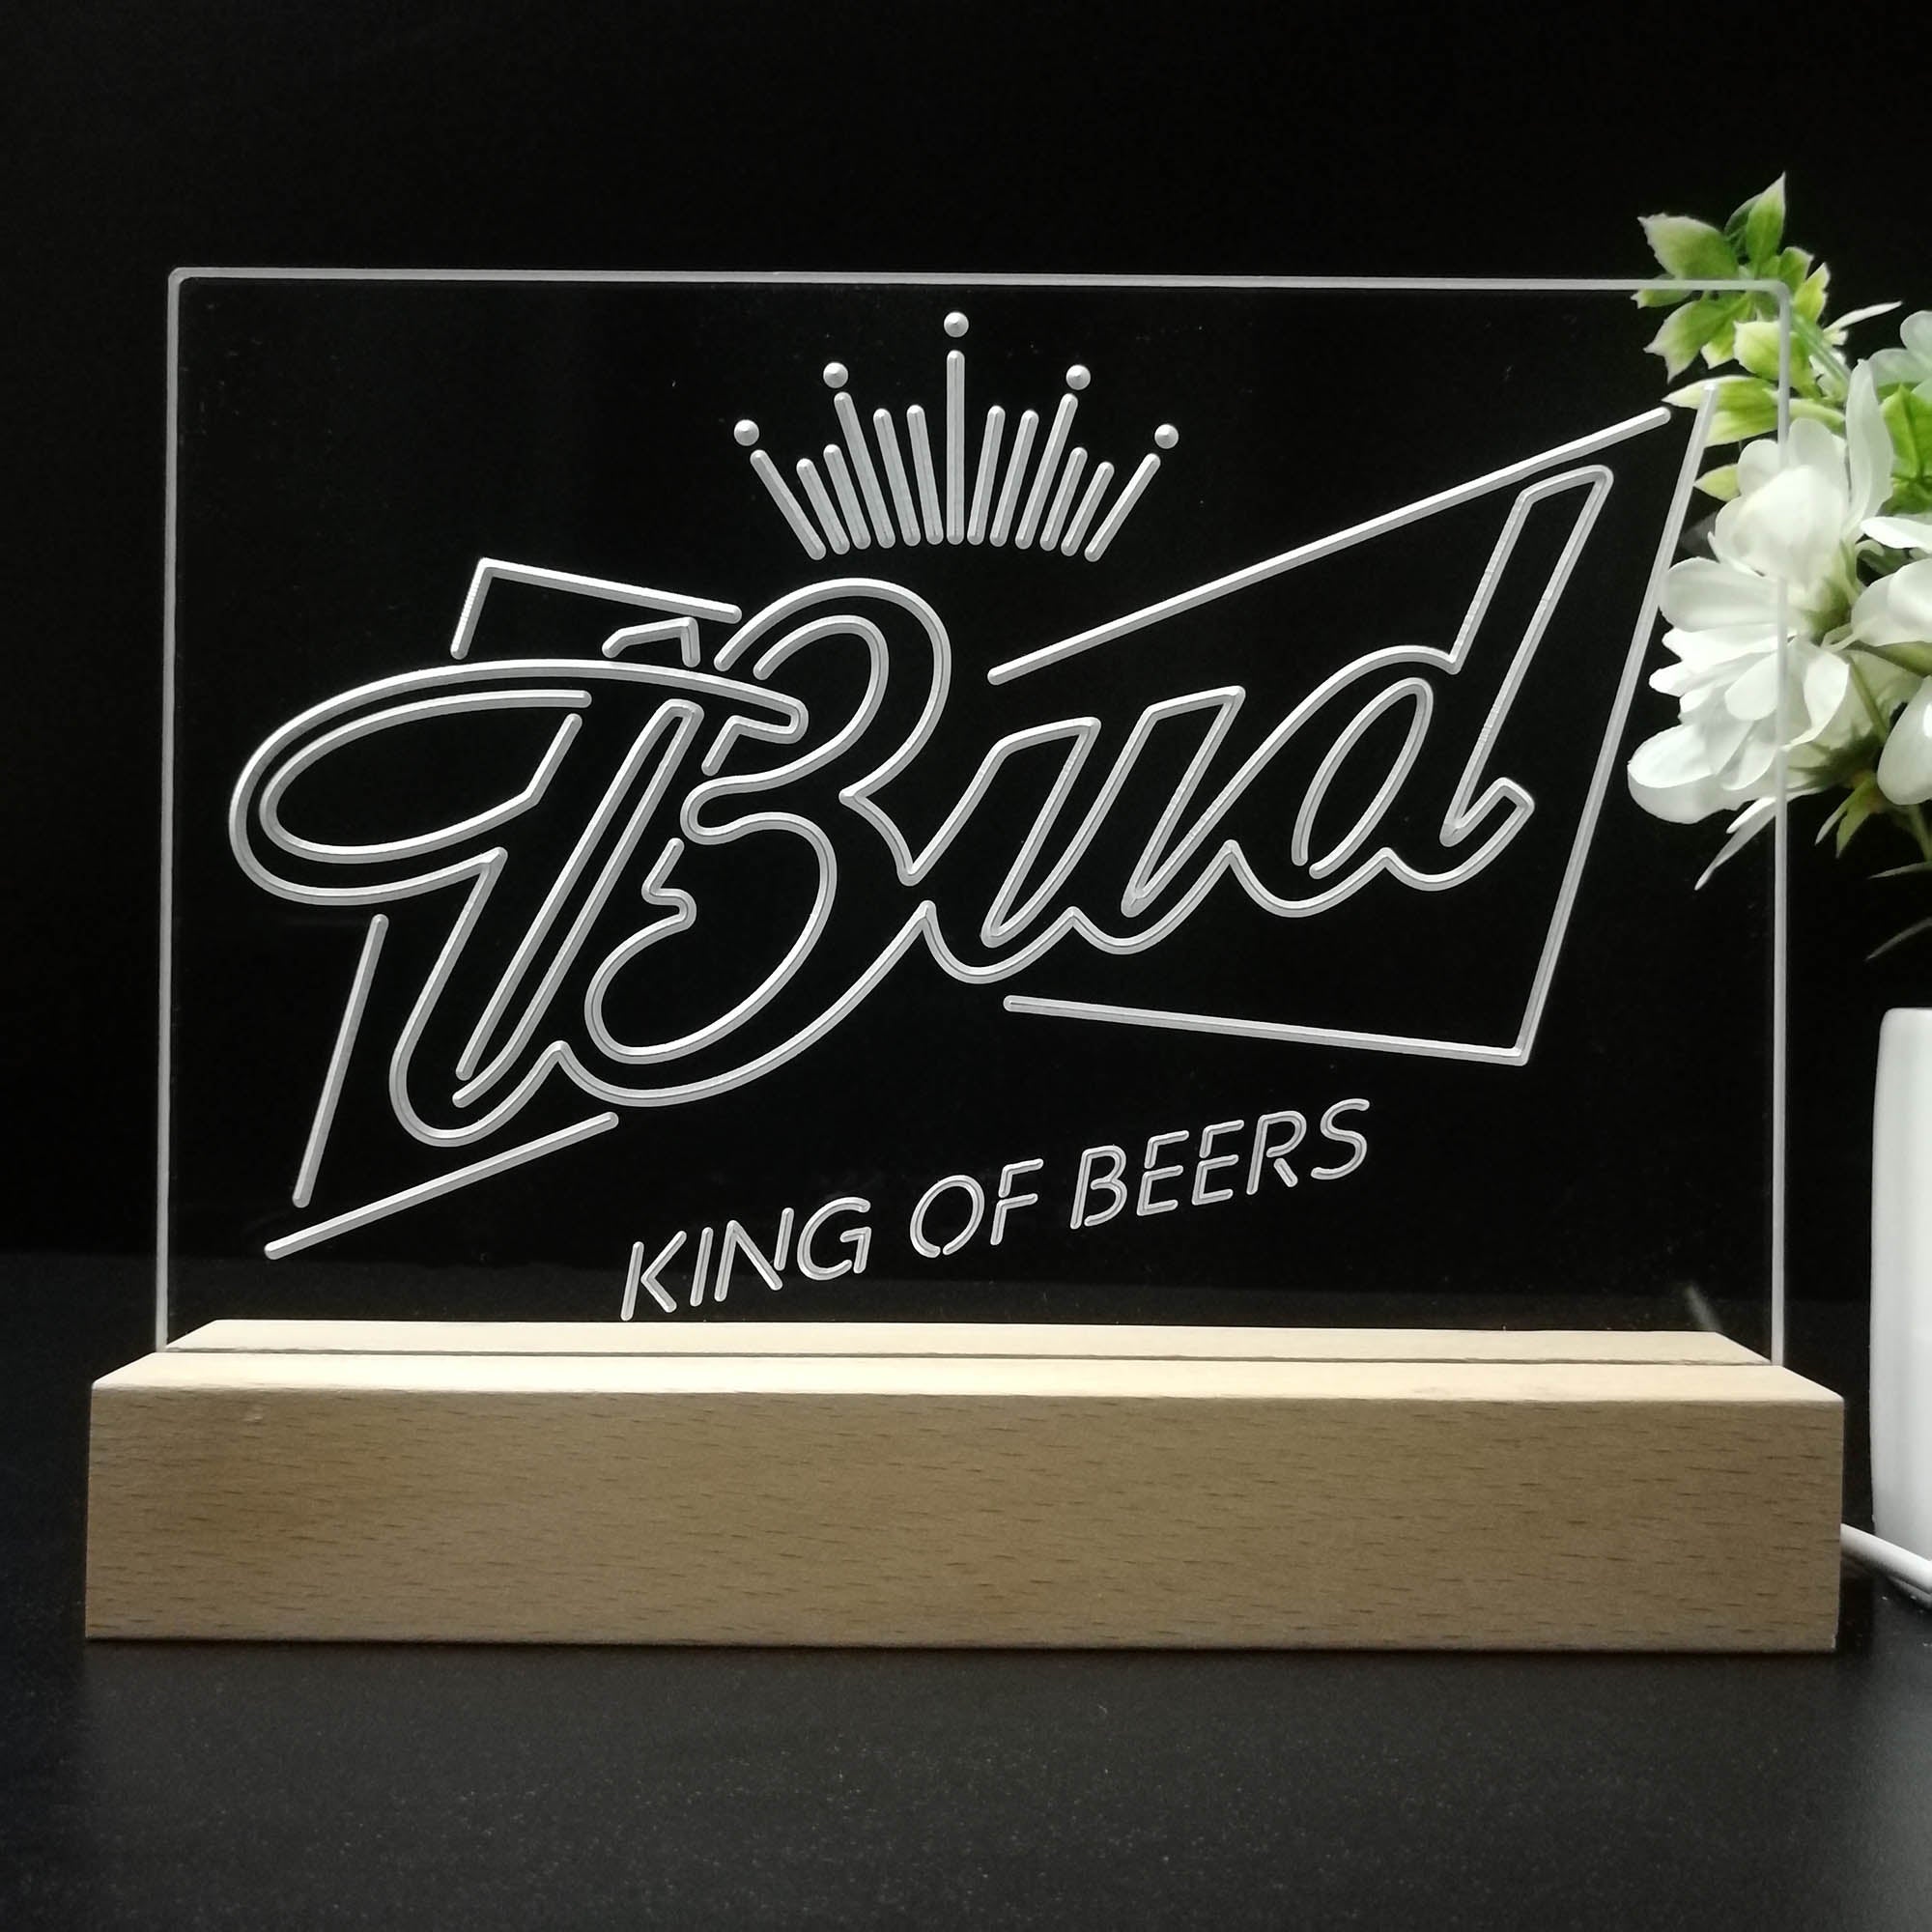 Bud King of Beer Crown Night Light LED Sign